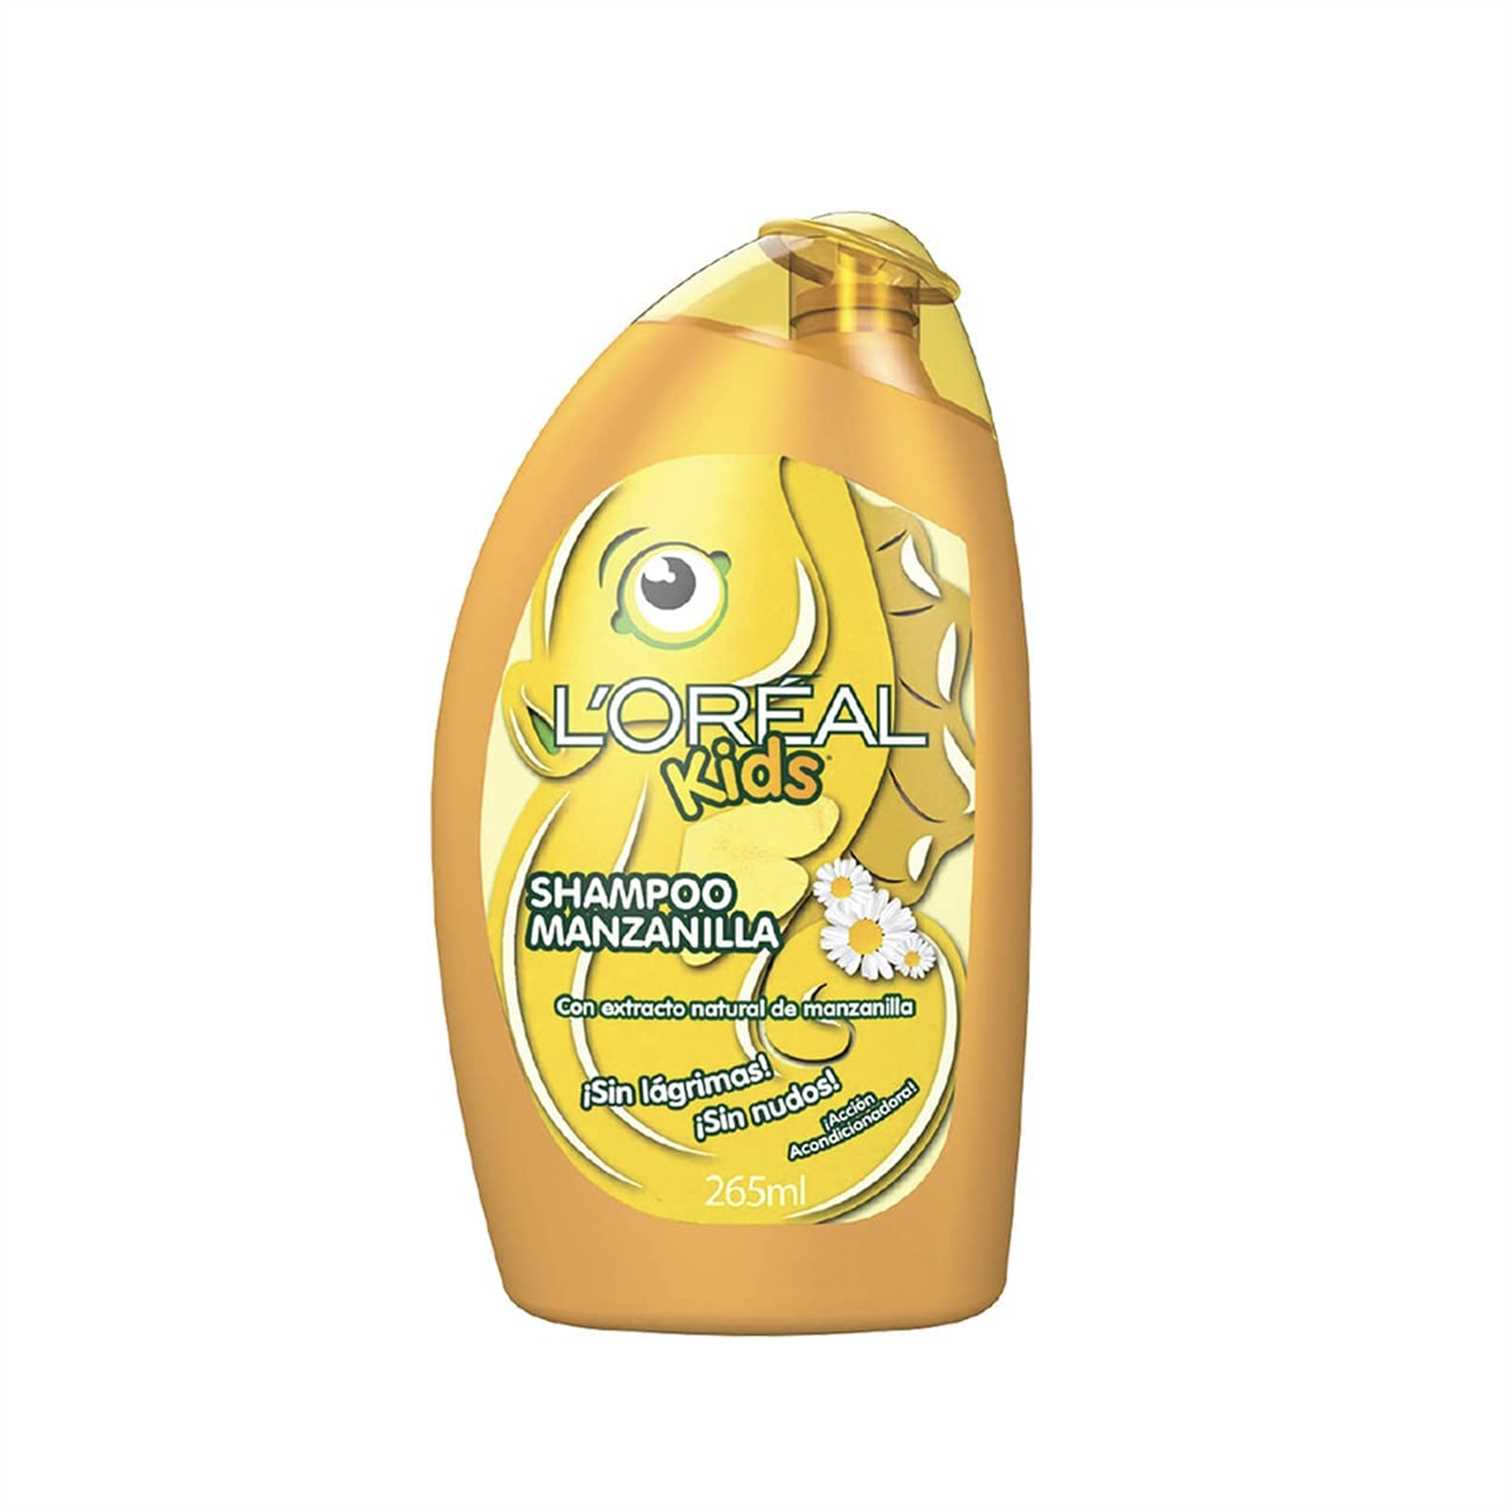 Buy L'oreal Kids Shampoo Manzanilla - 265ml Online in India at uyyaala.com